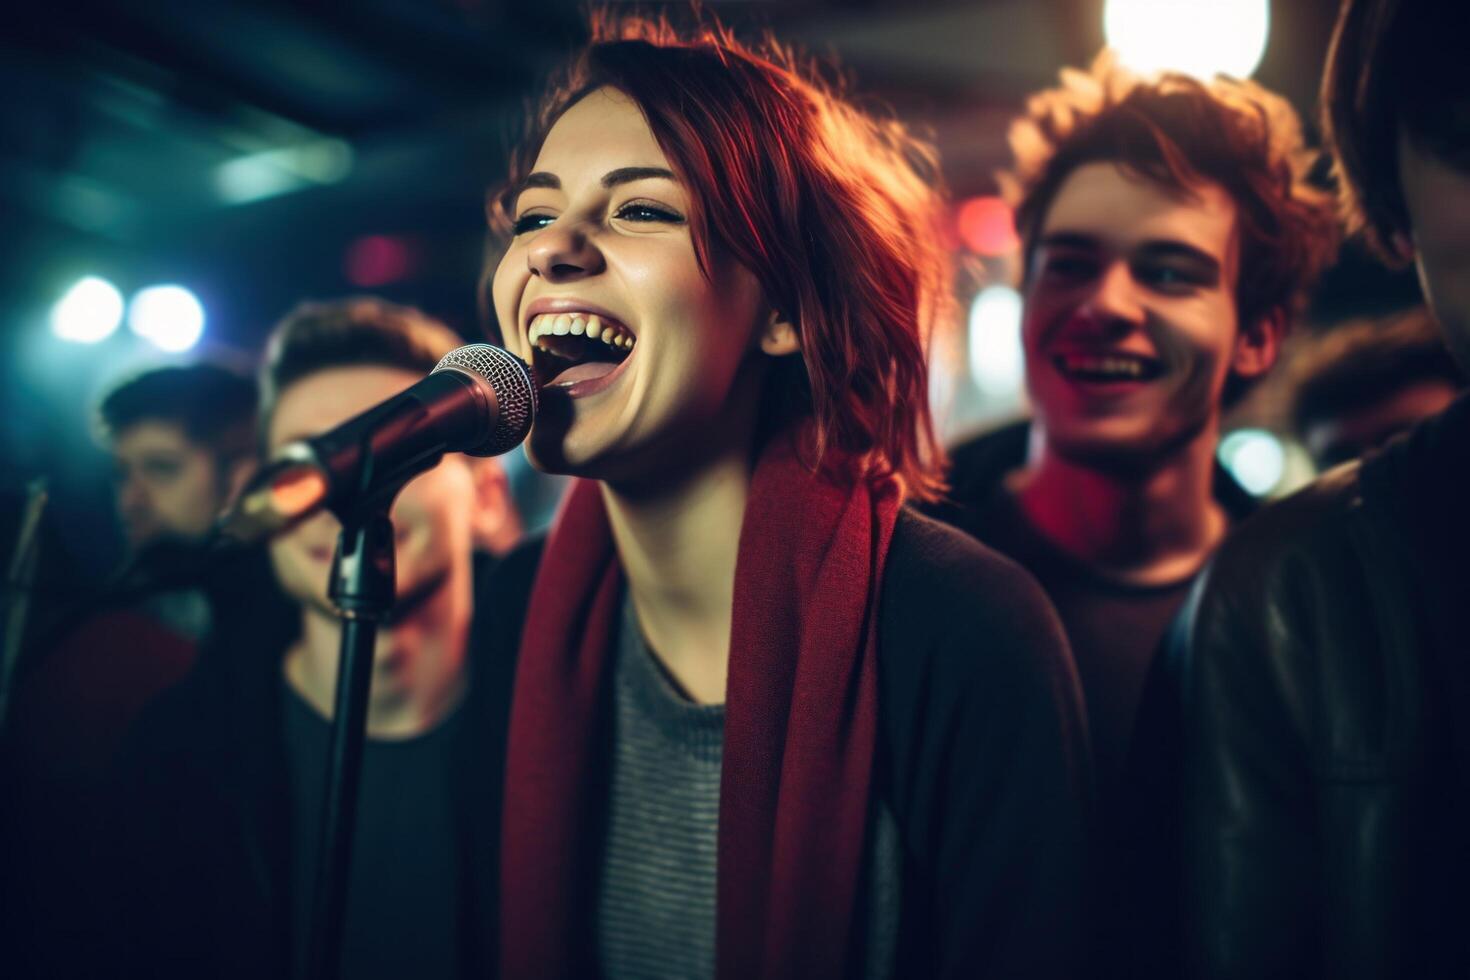 AI generated happy karaoke group at a club photo